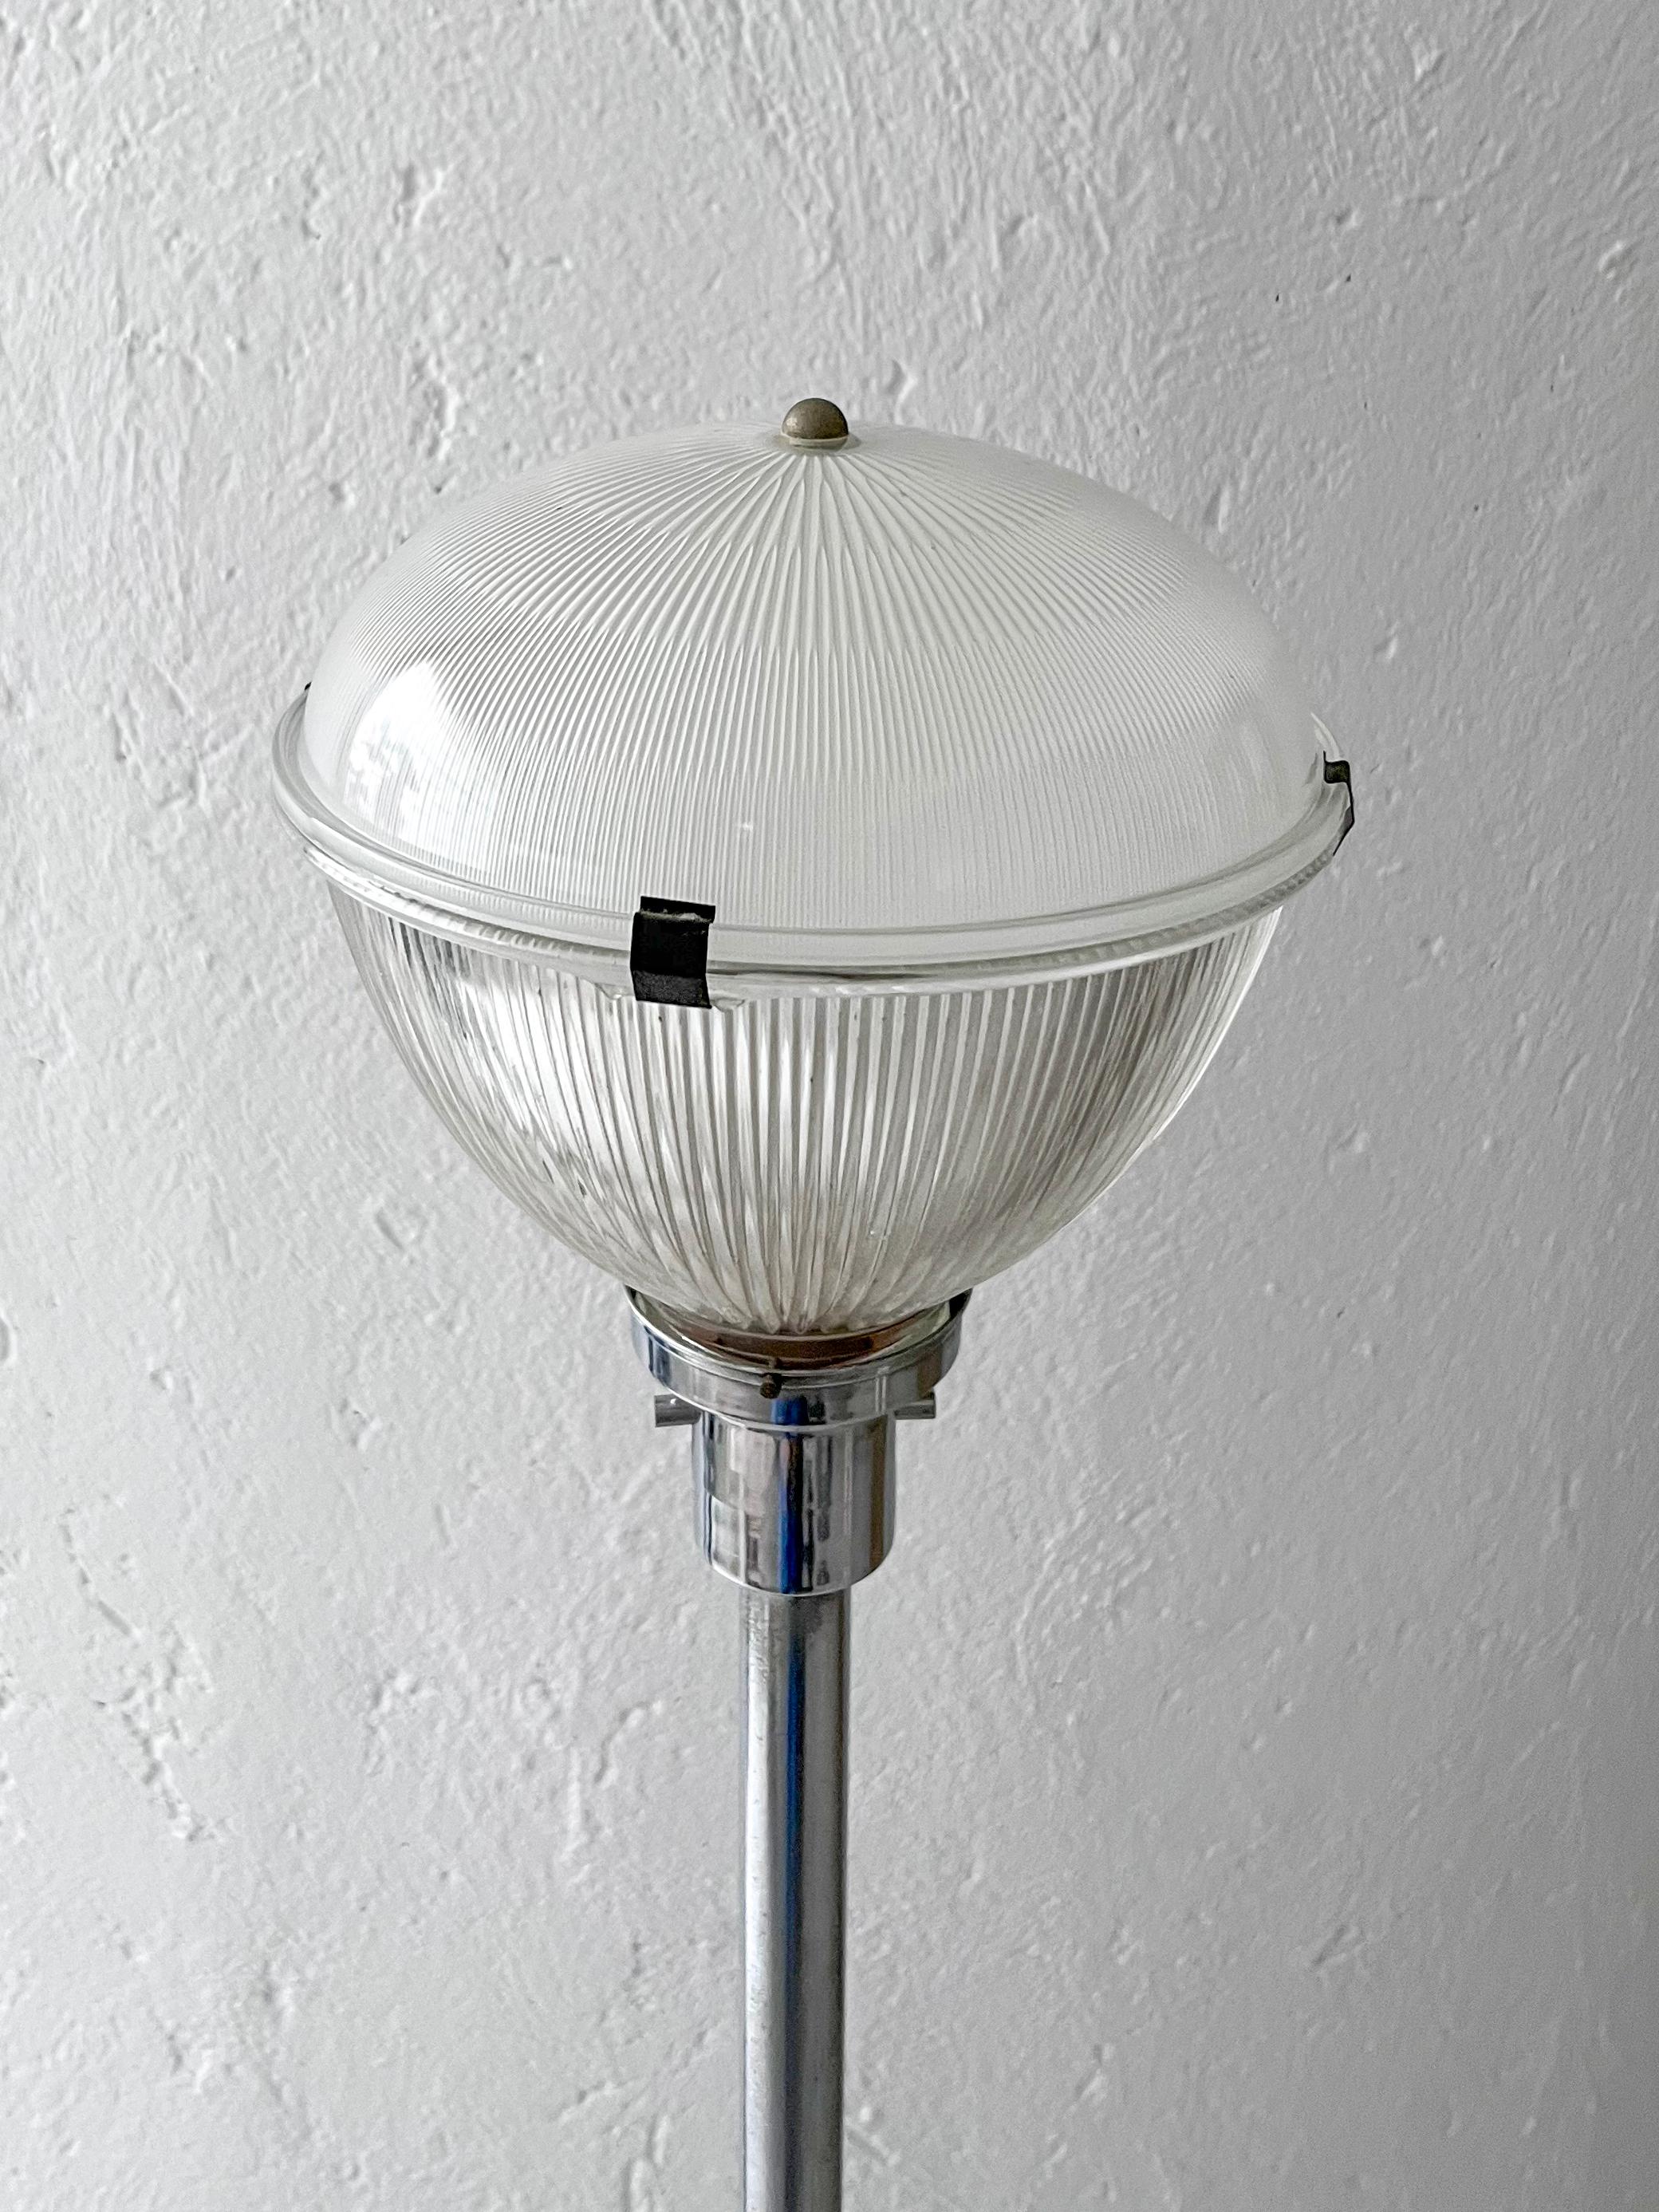 Italian Chromed Floor Lamp from the 1960s, Made in Italy, Mid-Century Modern Era For Sale